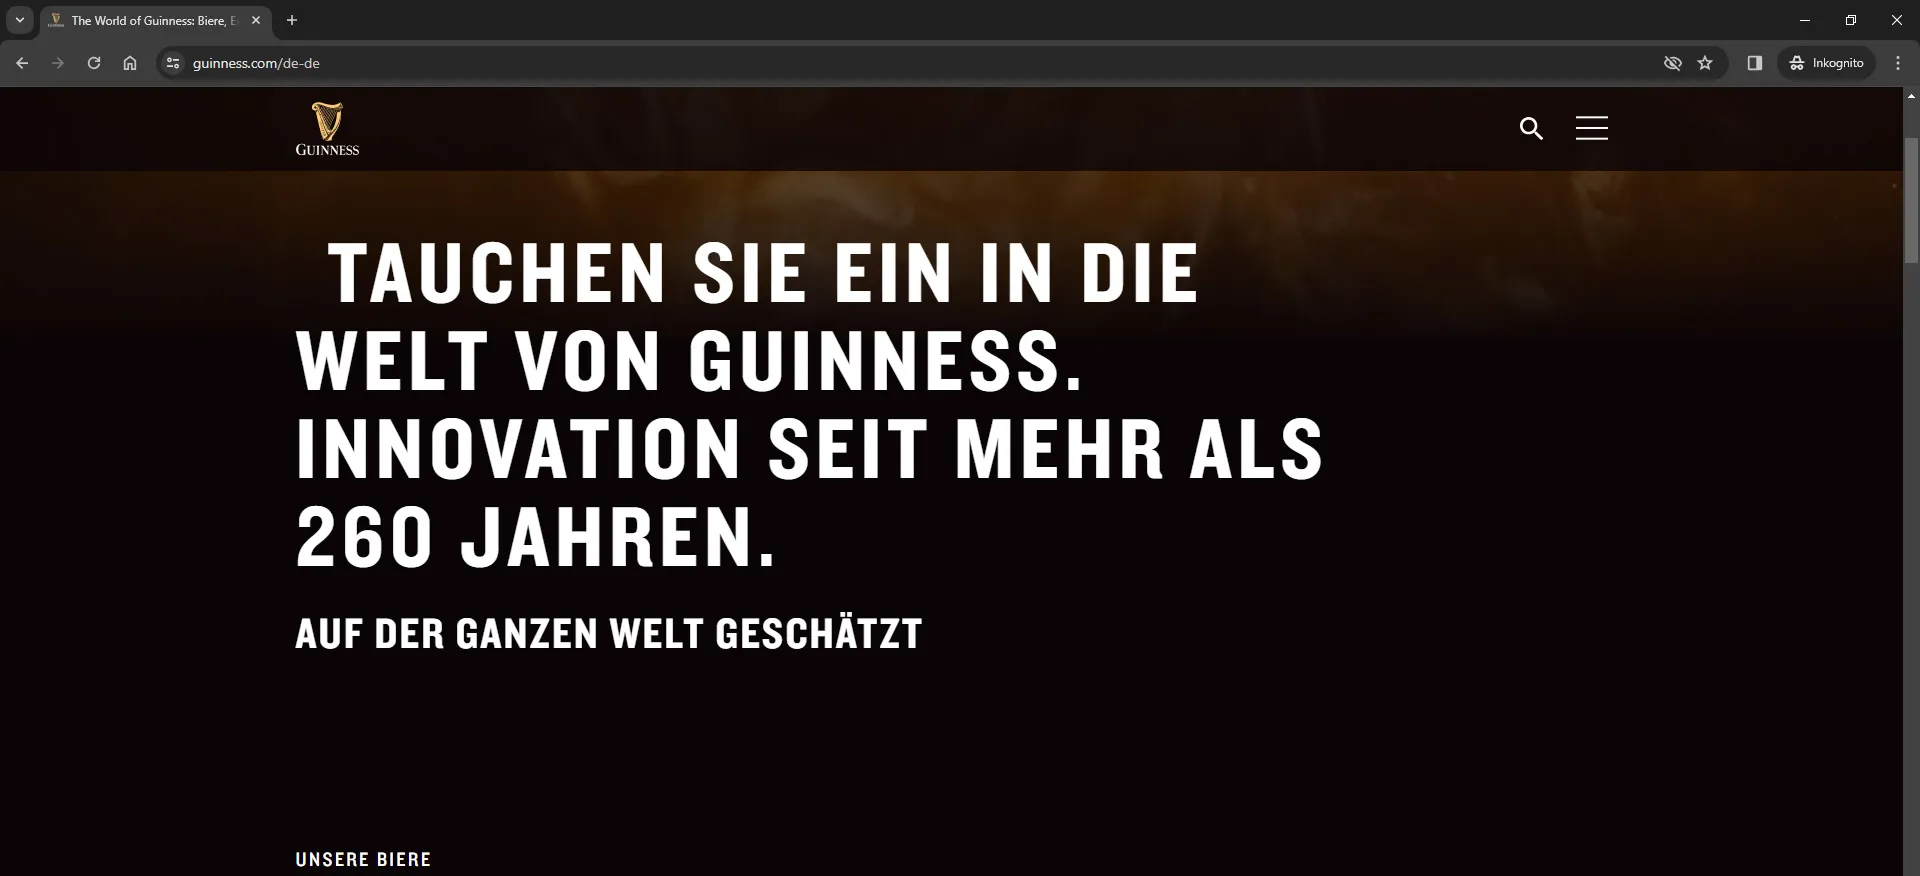 Guinness-Logo in der Desktop-Ansicht beim Scrolling